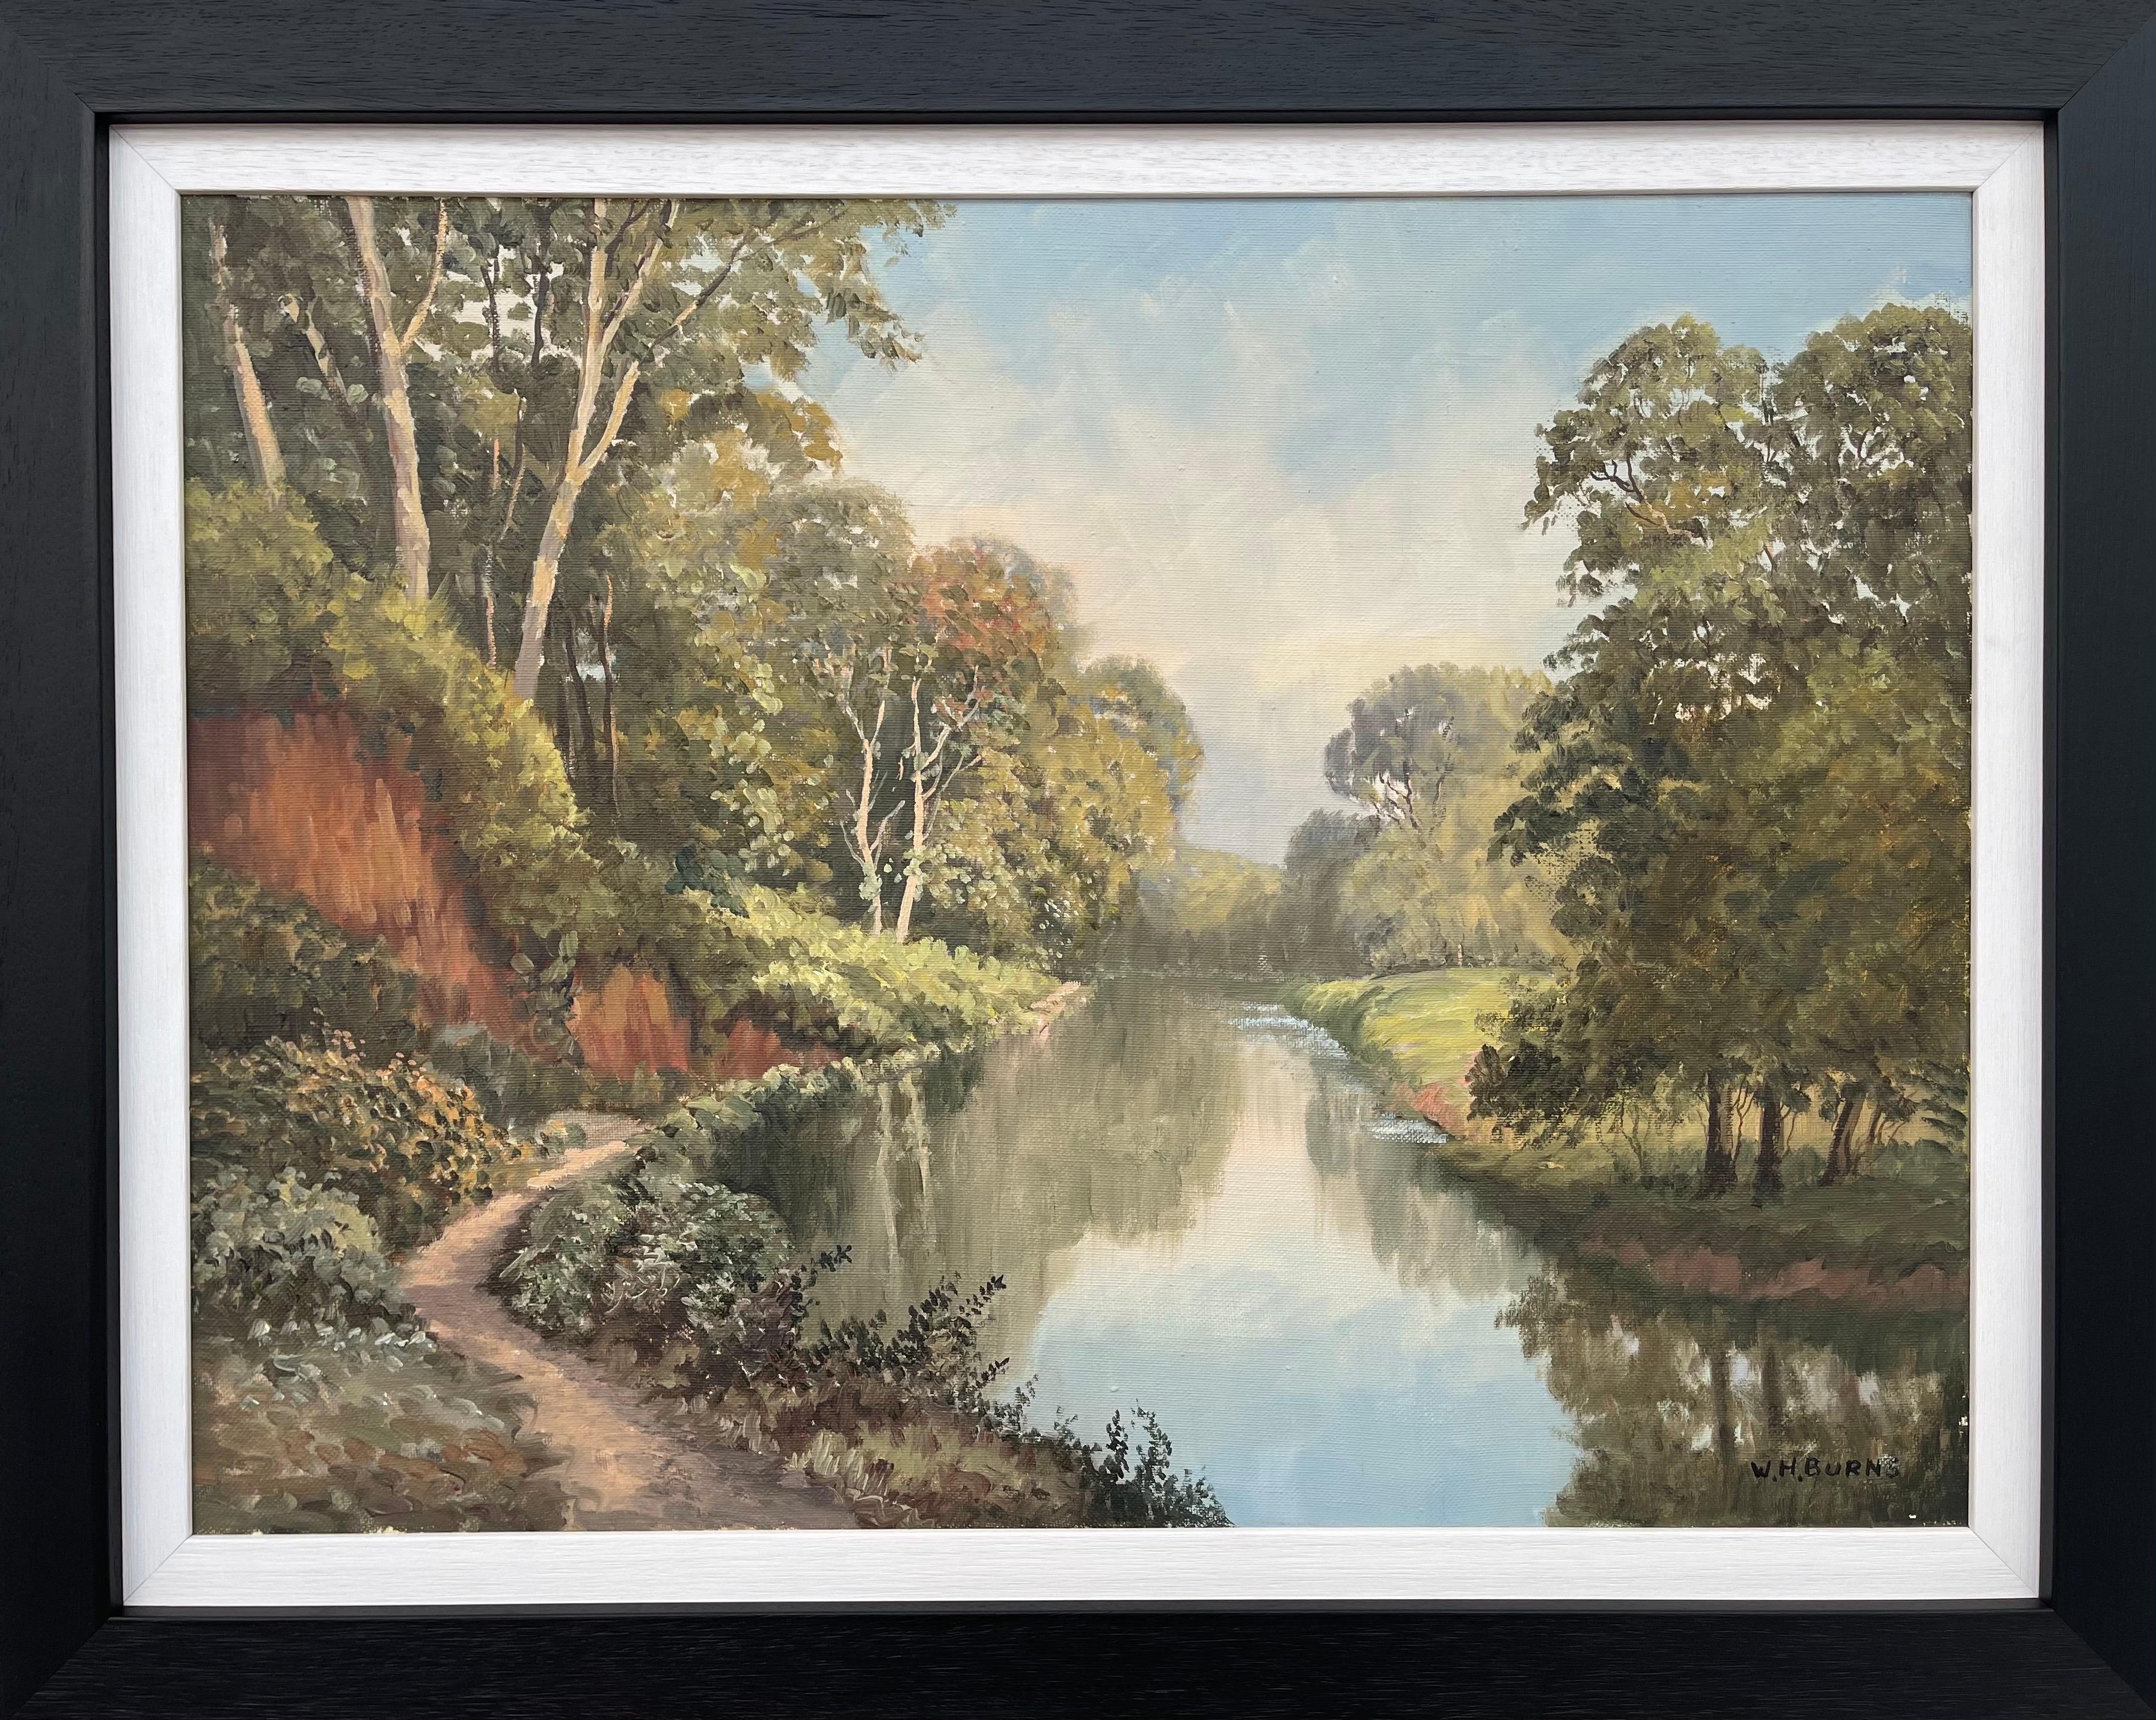 William Henry Burns Figurative Painting - Painting of Idyllic River Scene On the Lagan in Ireland by Modern Irish Artist 